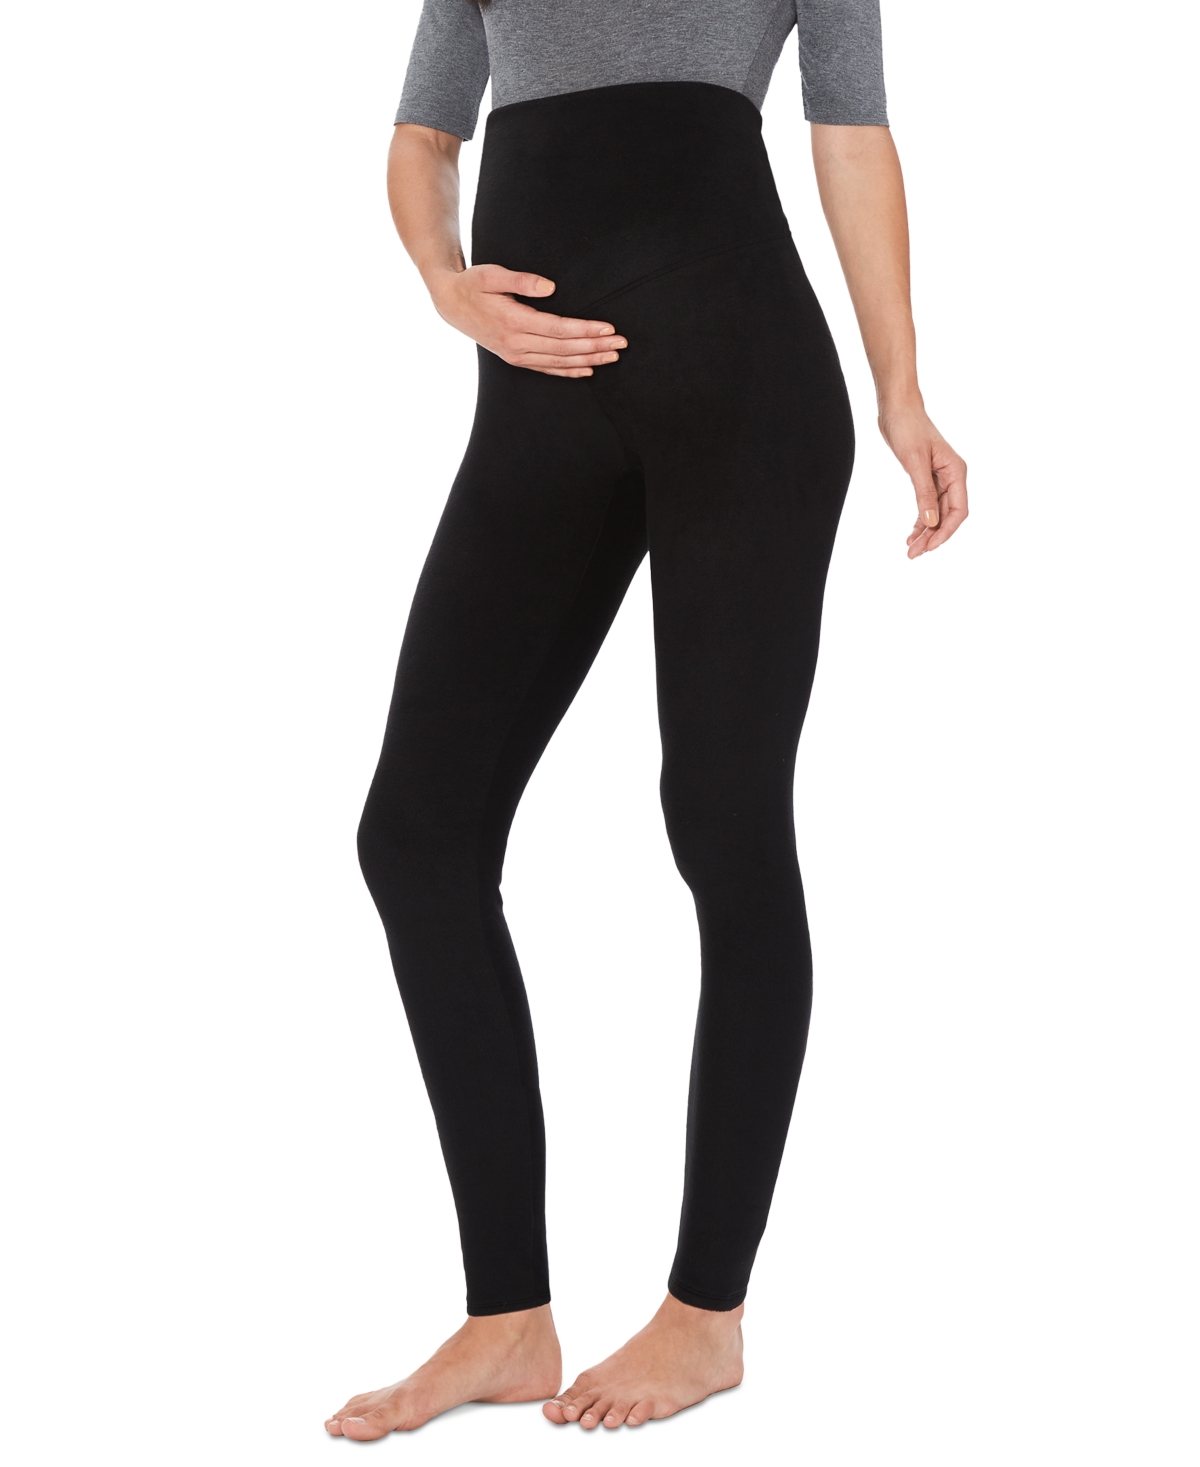 Women's Stretch Fleece Maternity Leggings - Black